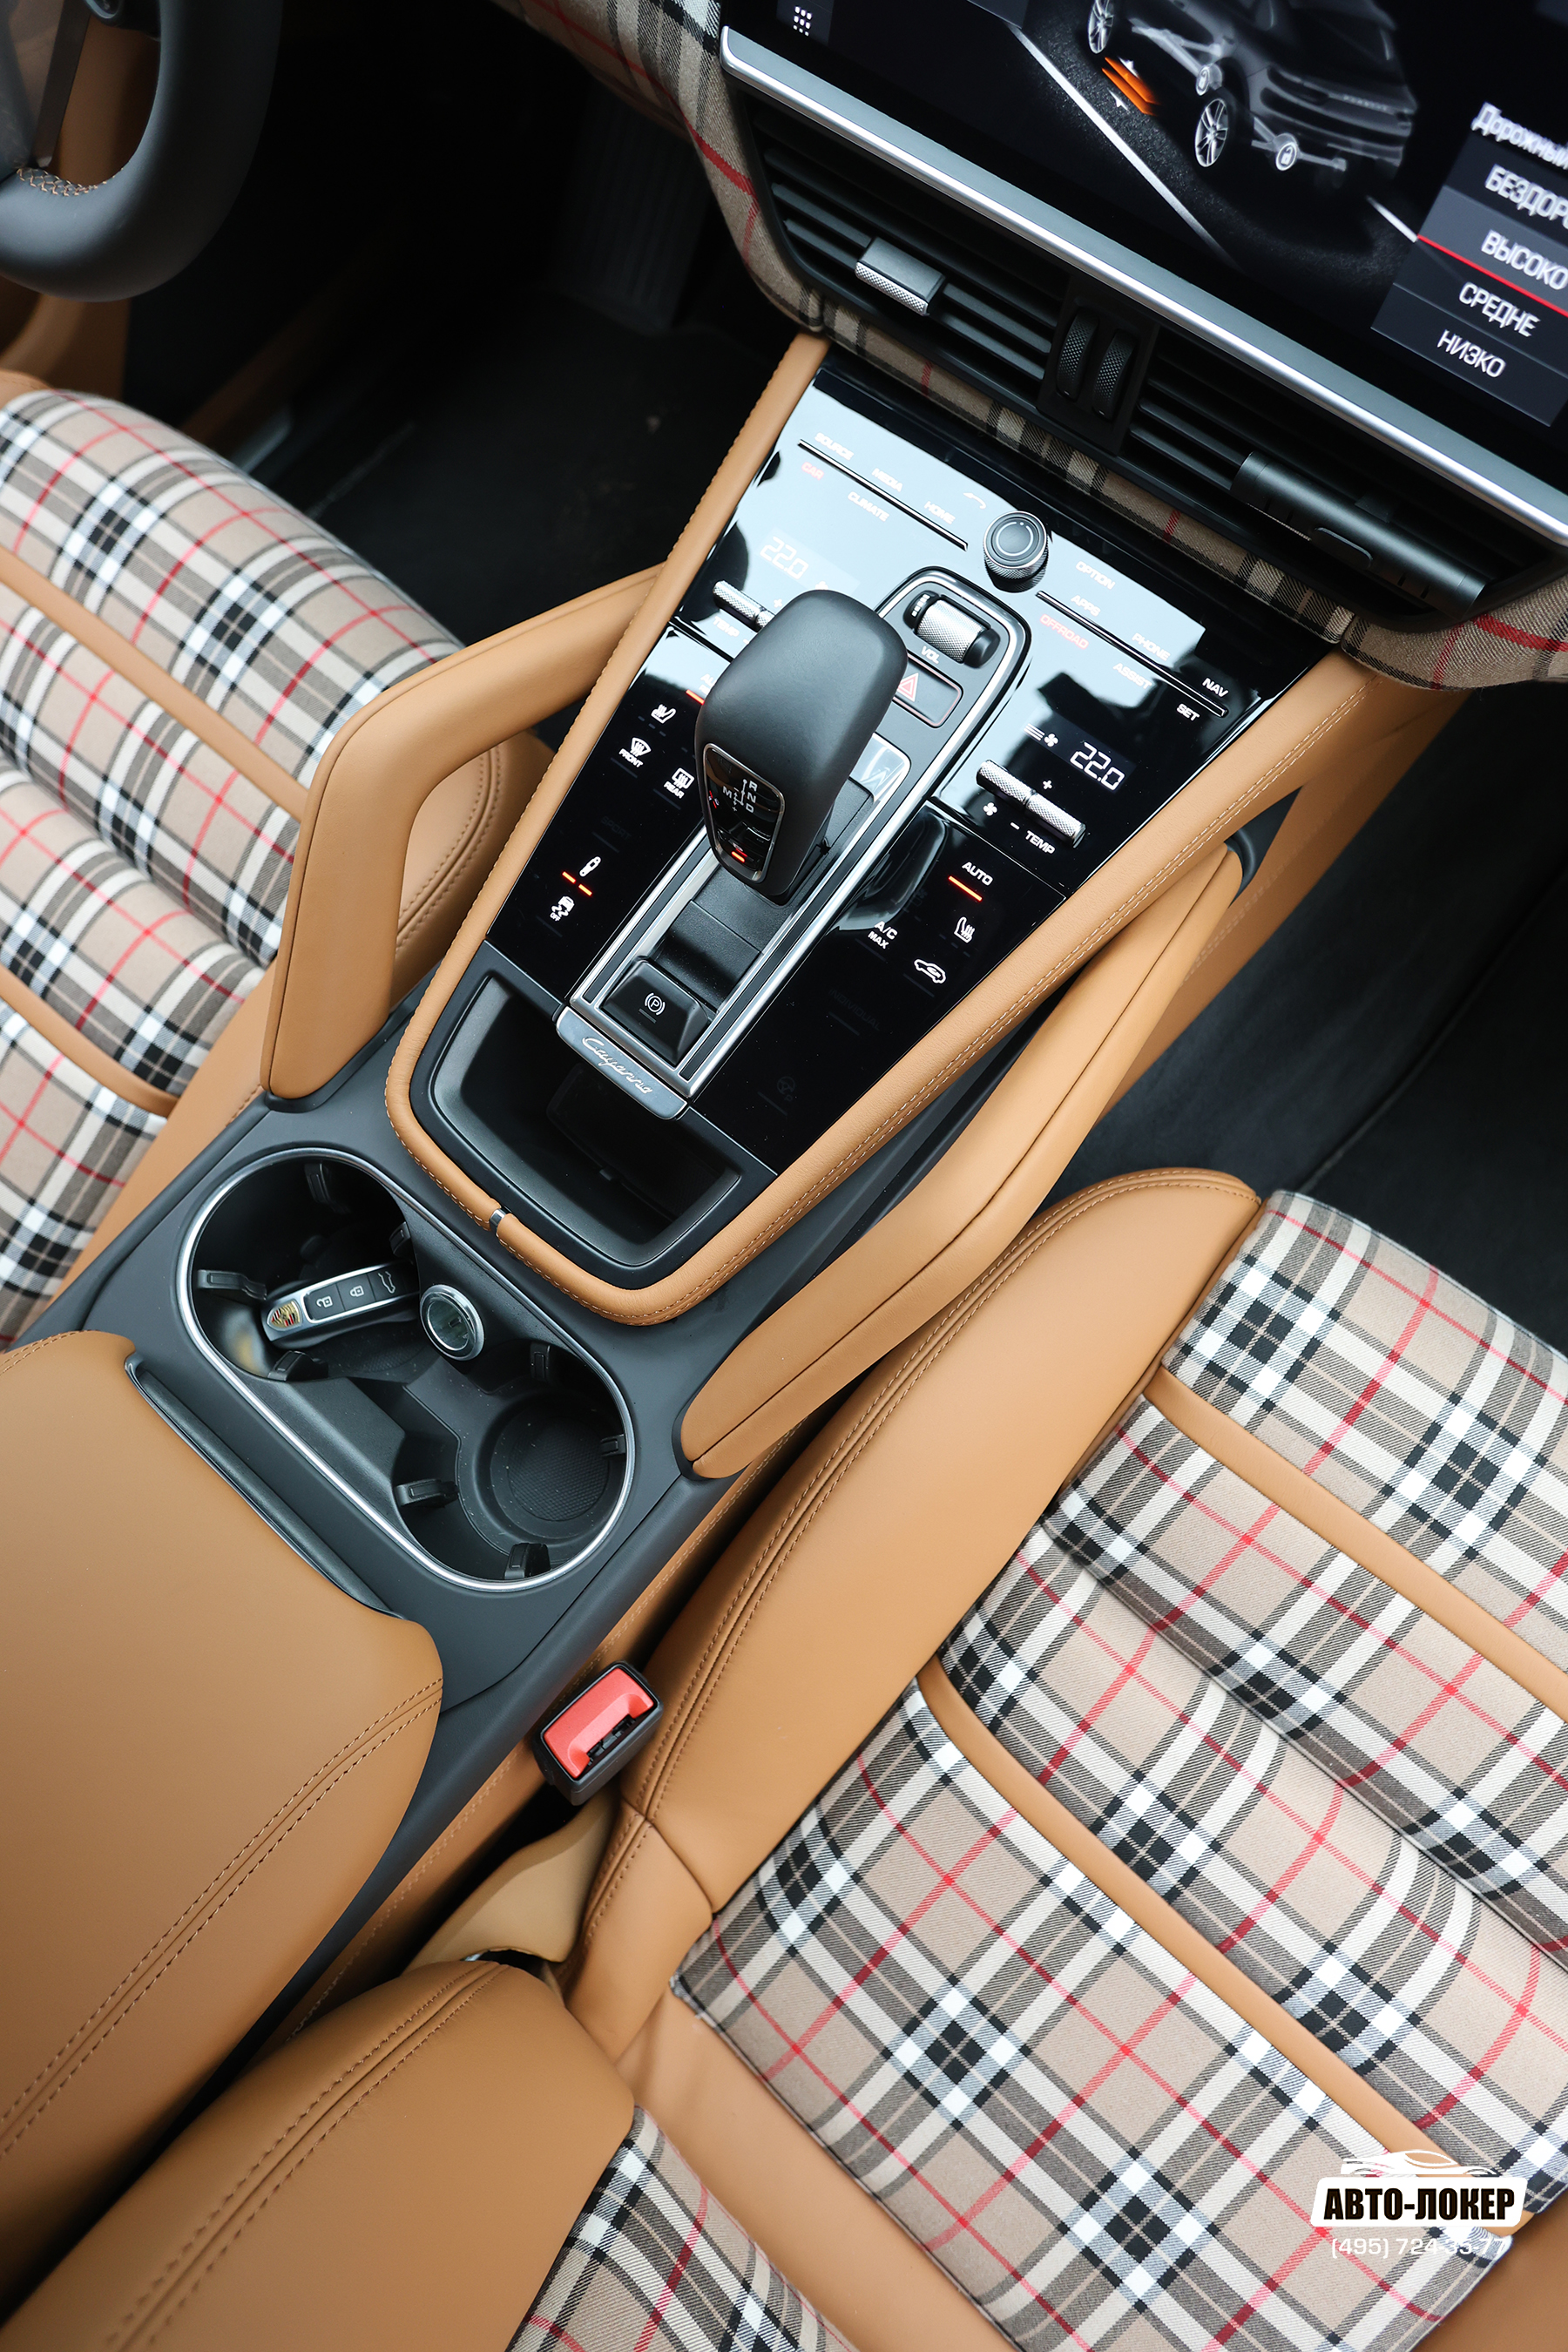 Перетяжка передних сидений салона Porsche Cayenne в стиле Burberry